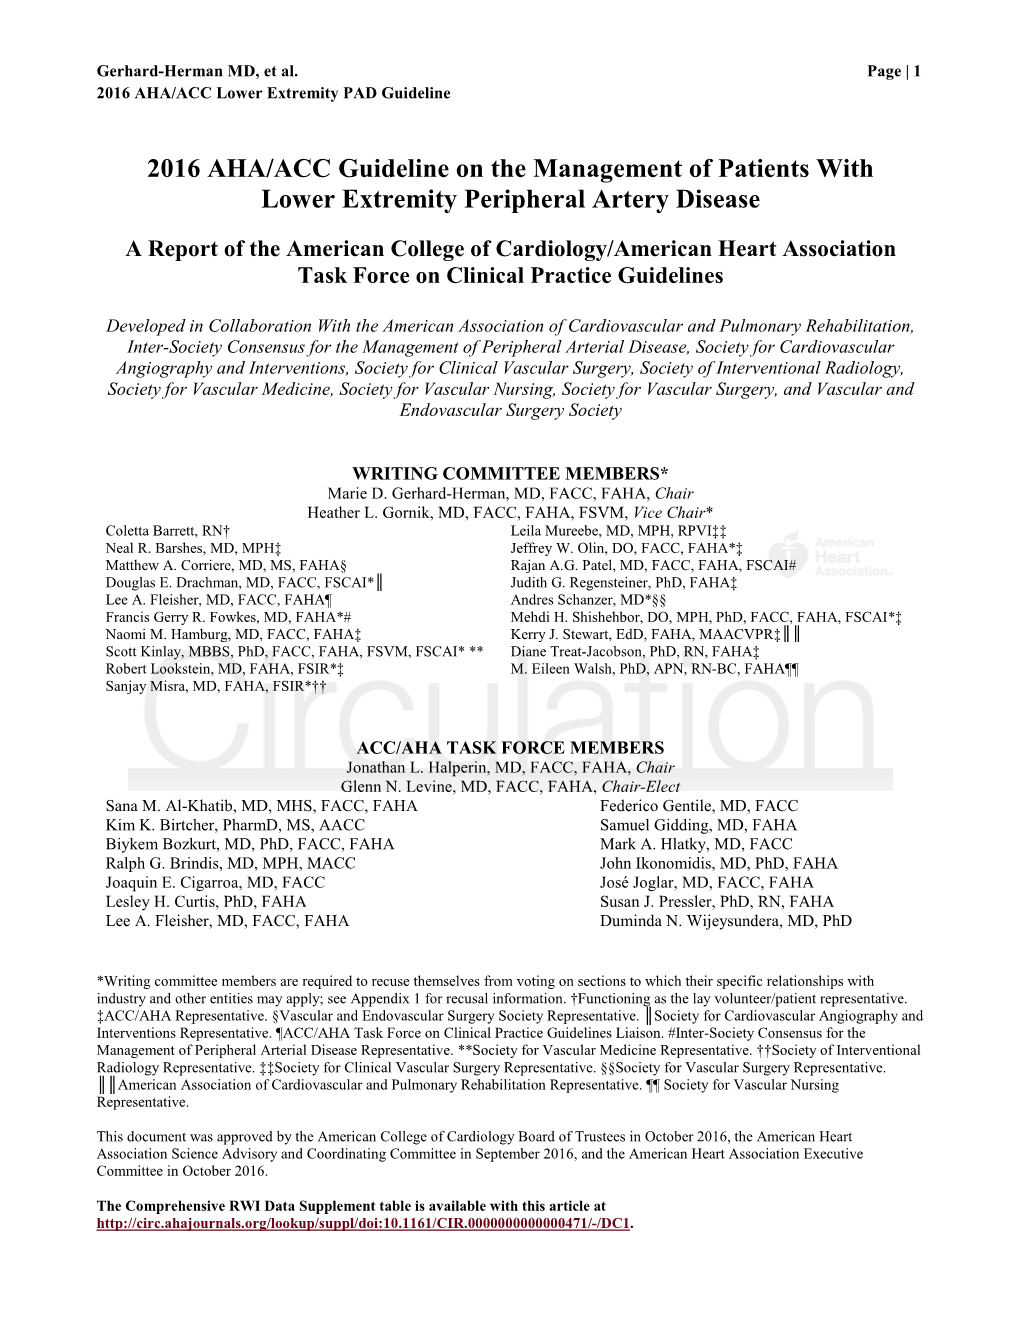 ACCF/AHA/NHLBI 2009 Expert Consensus Document On